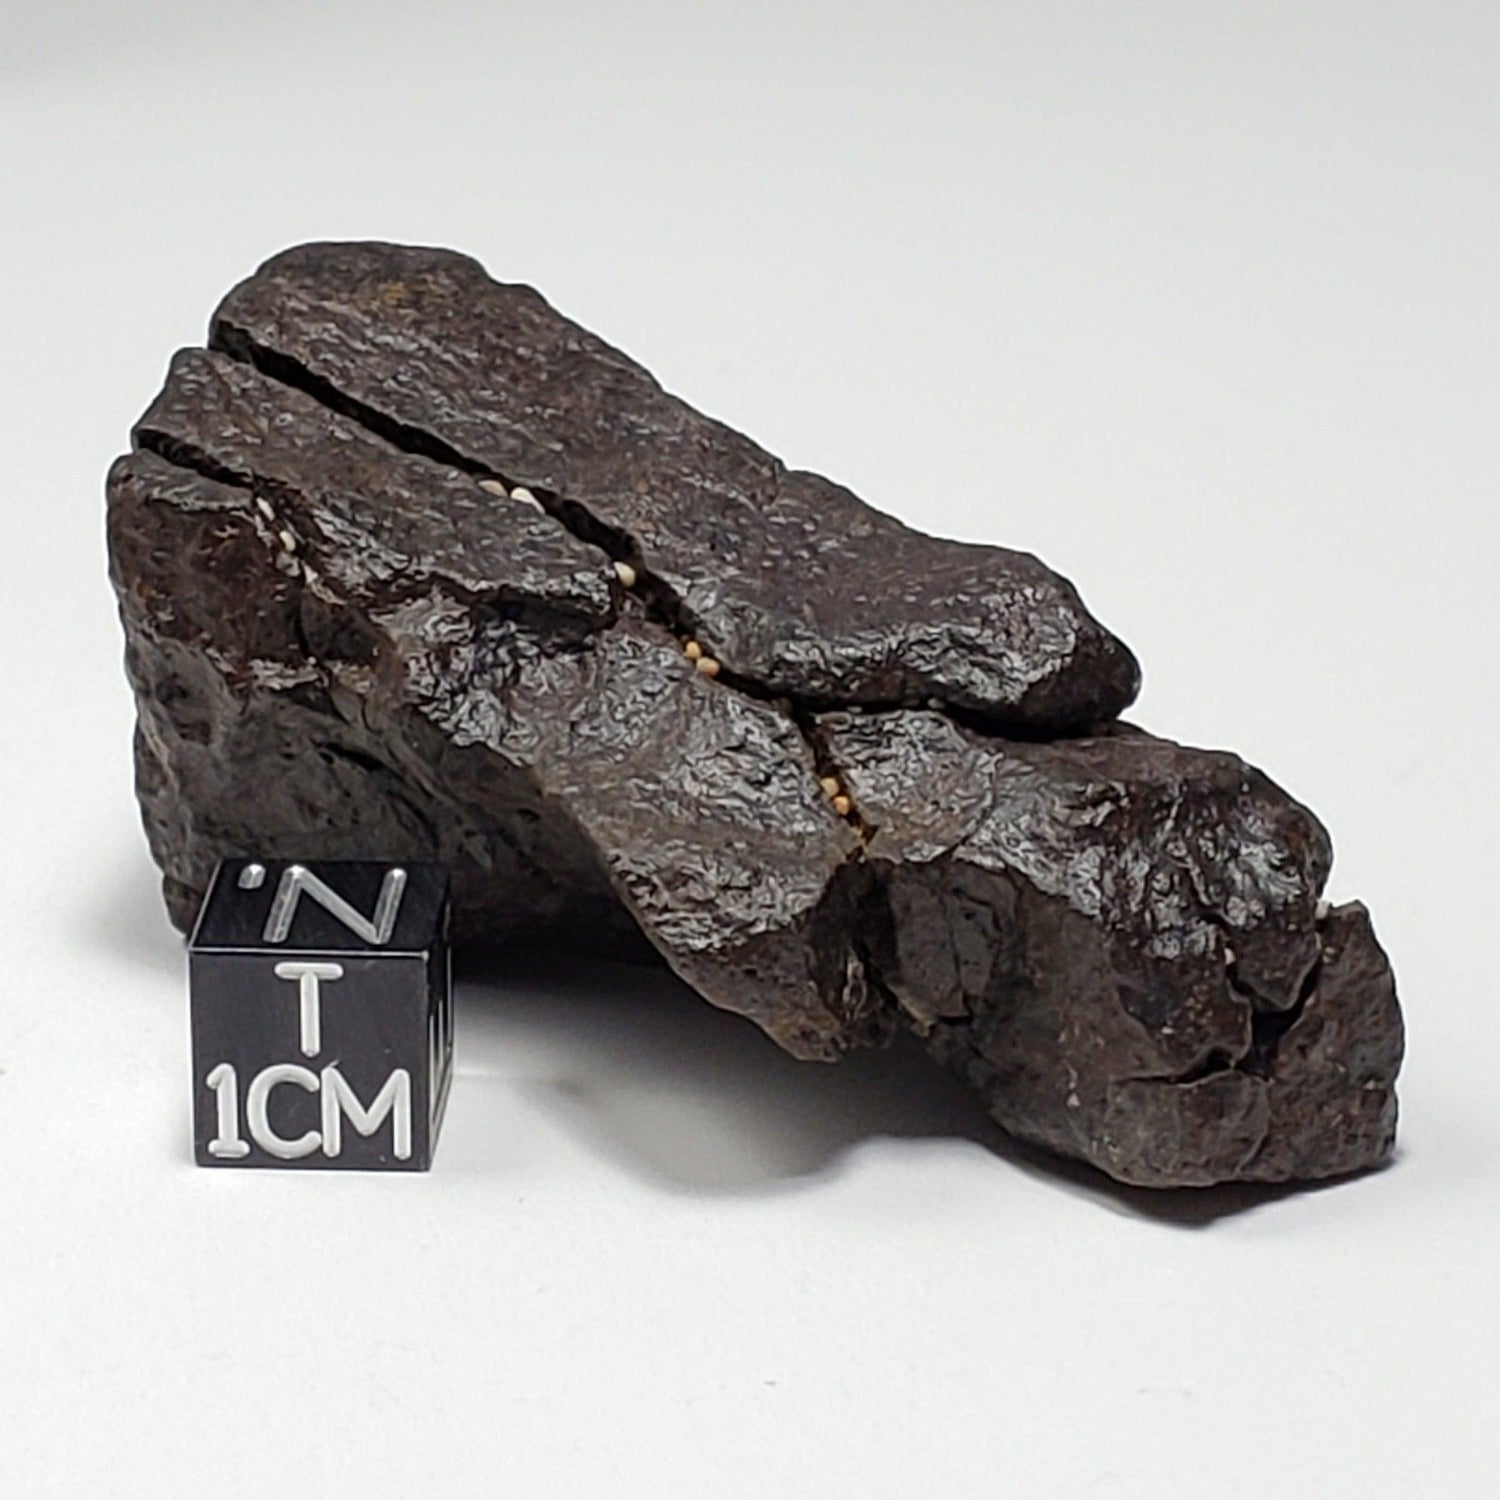 Dhofar 020 Meteorite | 82.14 Grams | Individual | H4-5 Shocked Chondrite | Sahara | Y2K